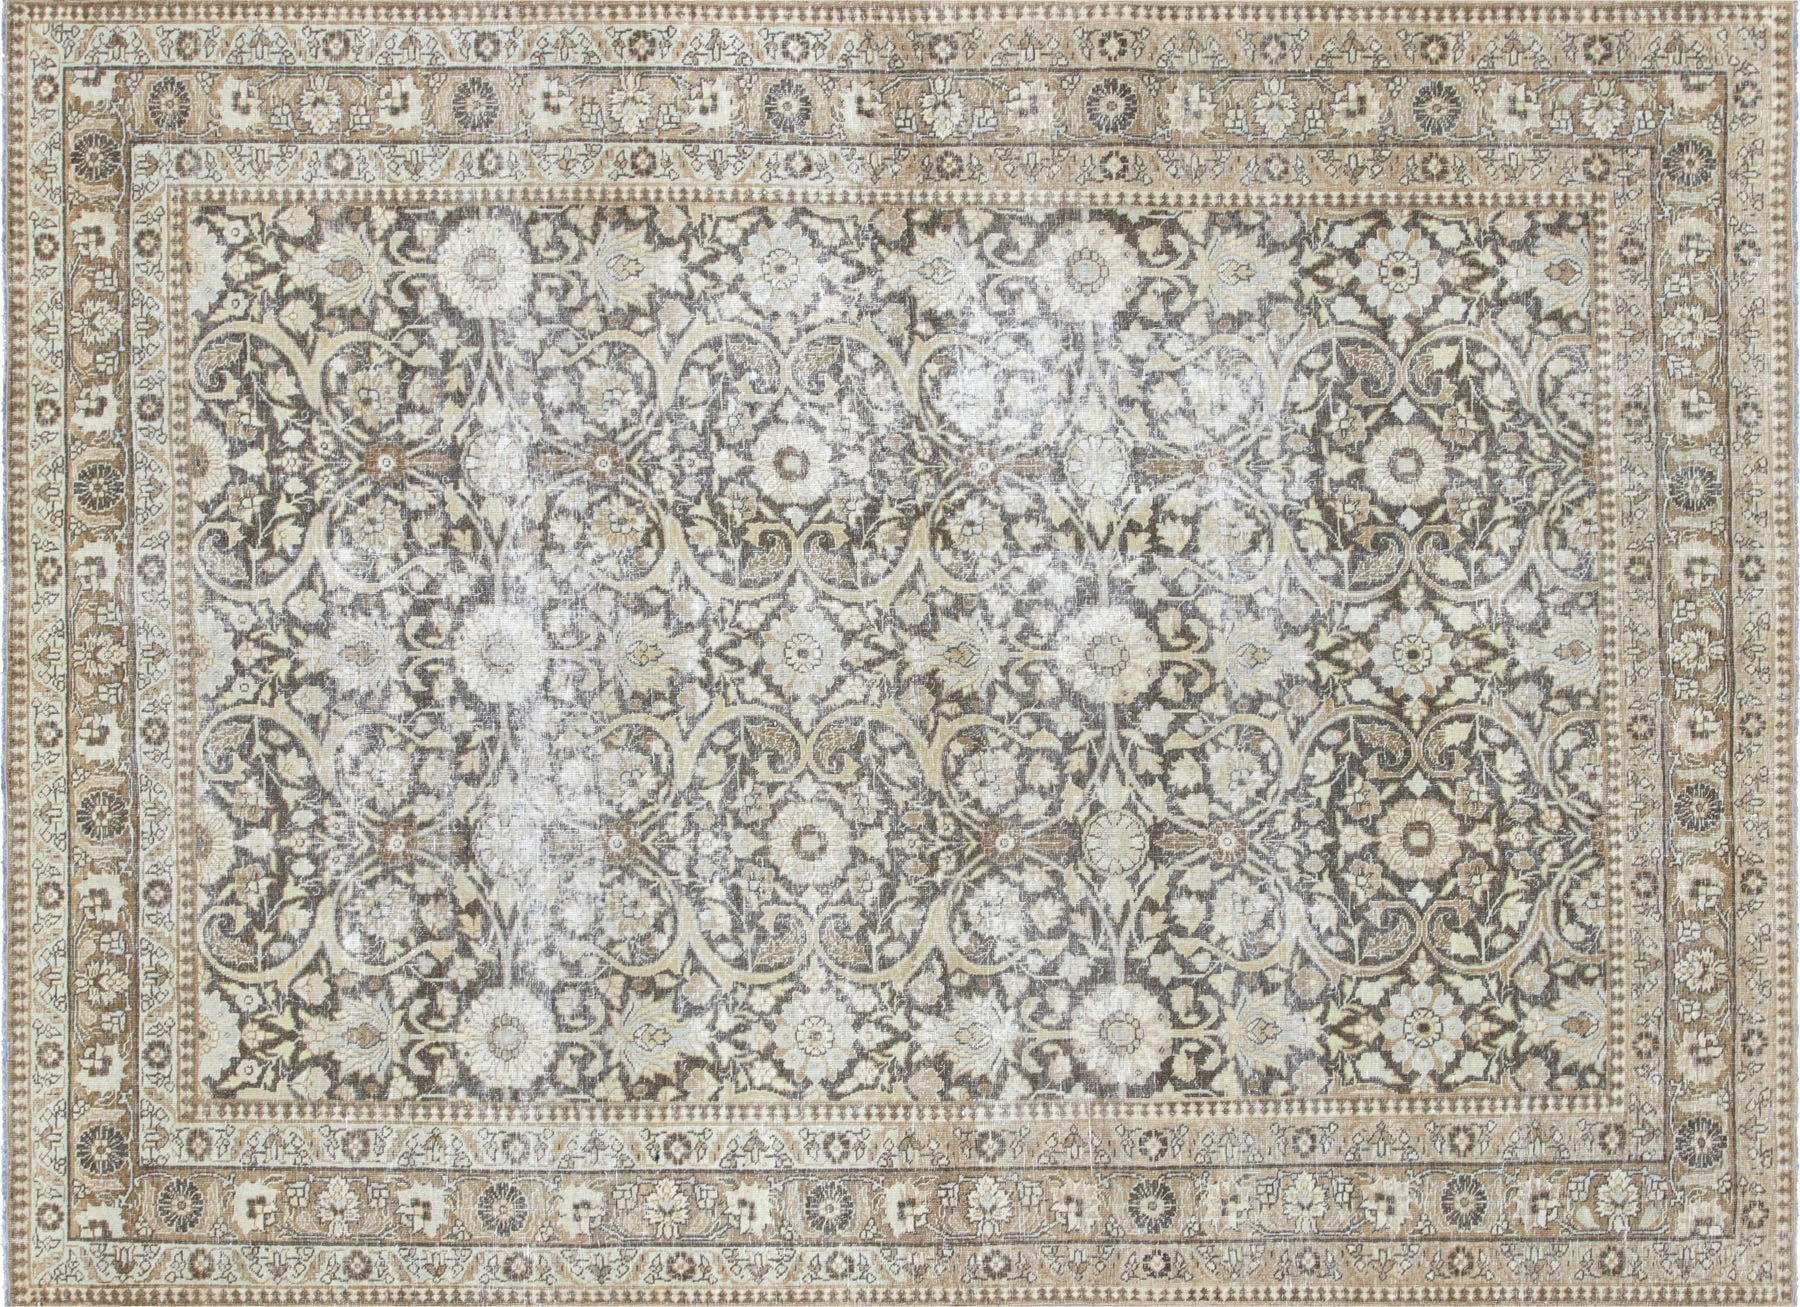 Antique Persian Tabriz Carpet - 7'3" x 9'10"